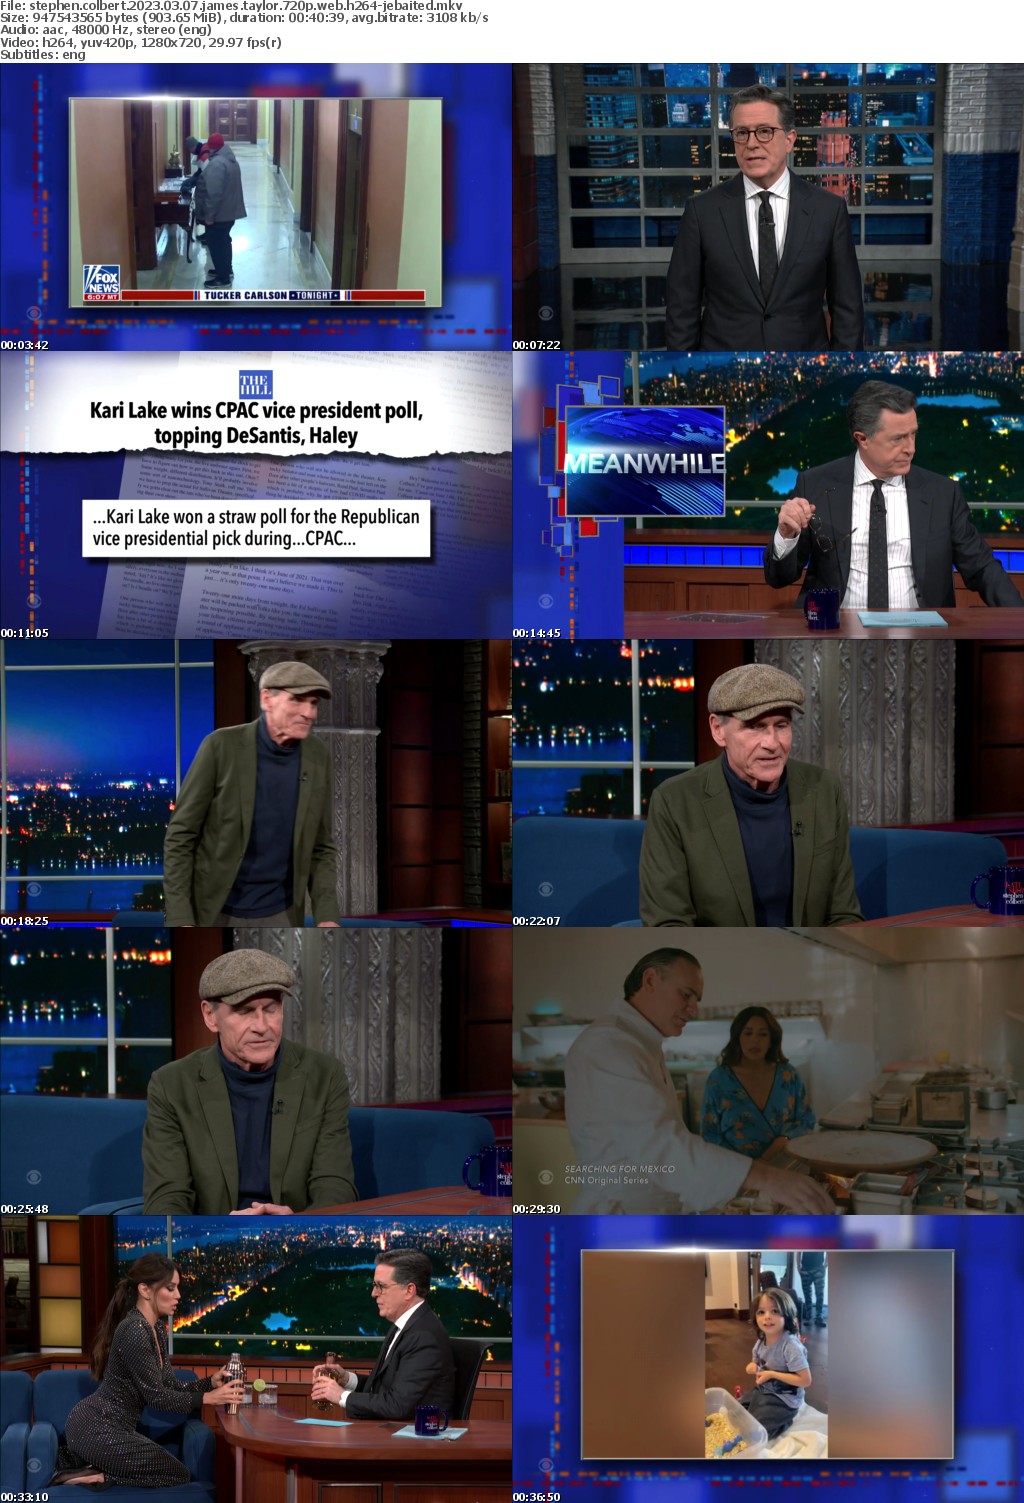 Stephen Colbert 2023 03 07 James Taylor 720p WEB H264-JEBAITED